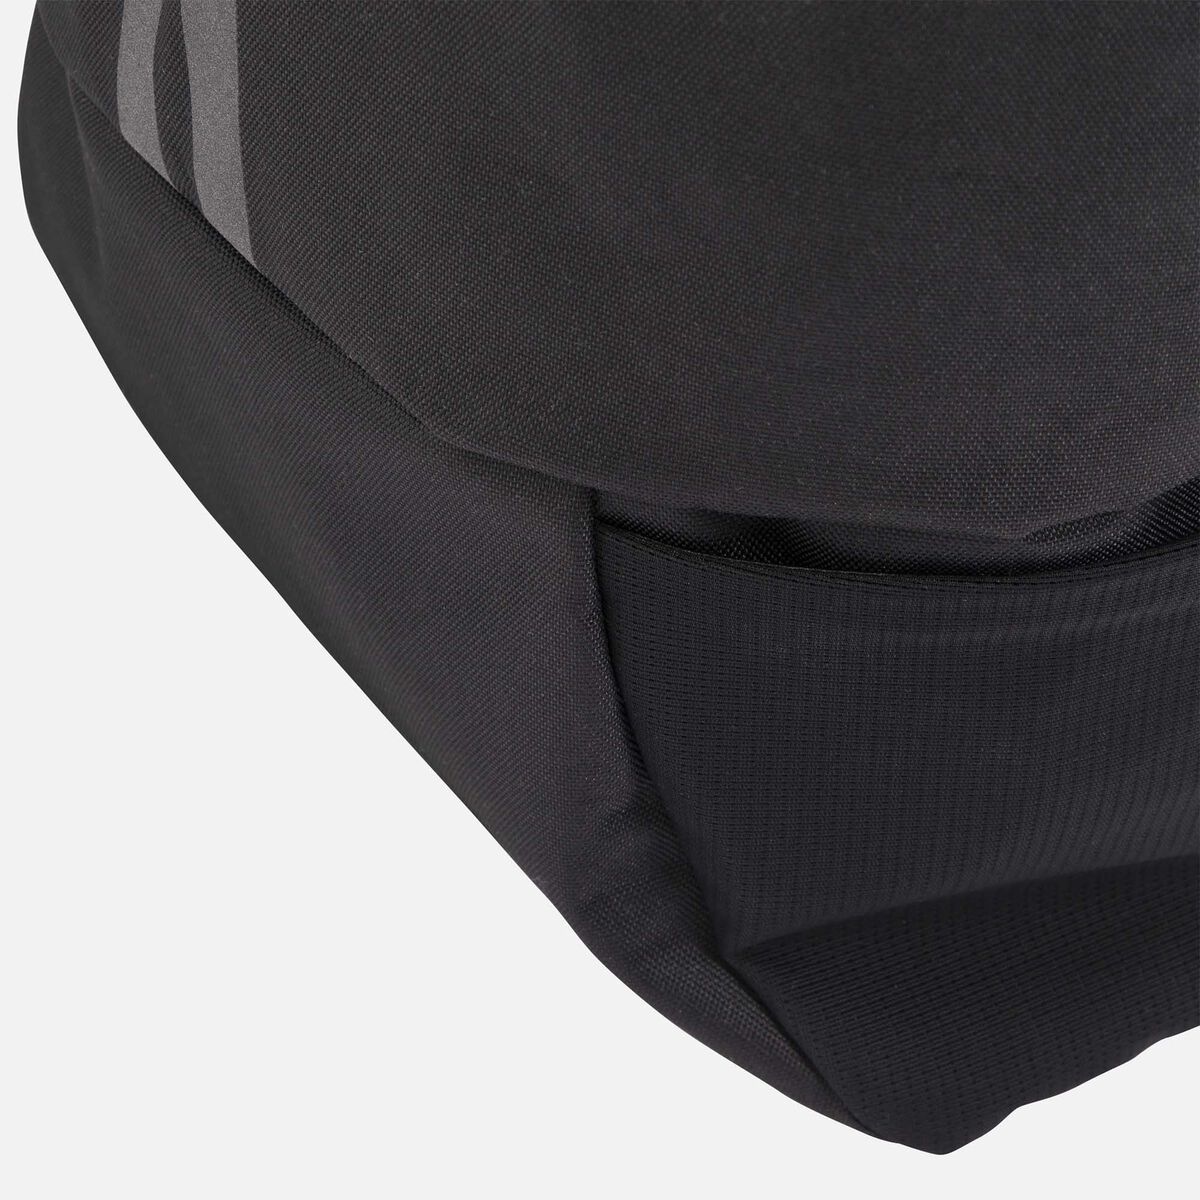 Rossignol Unisex 20L black Commuters backpack black